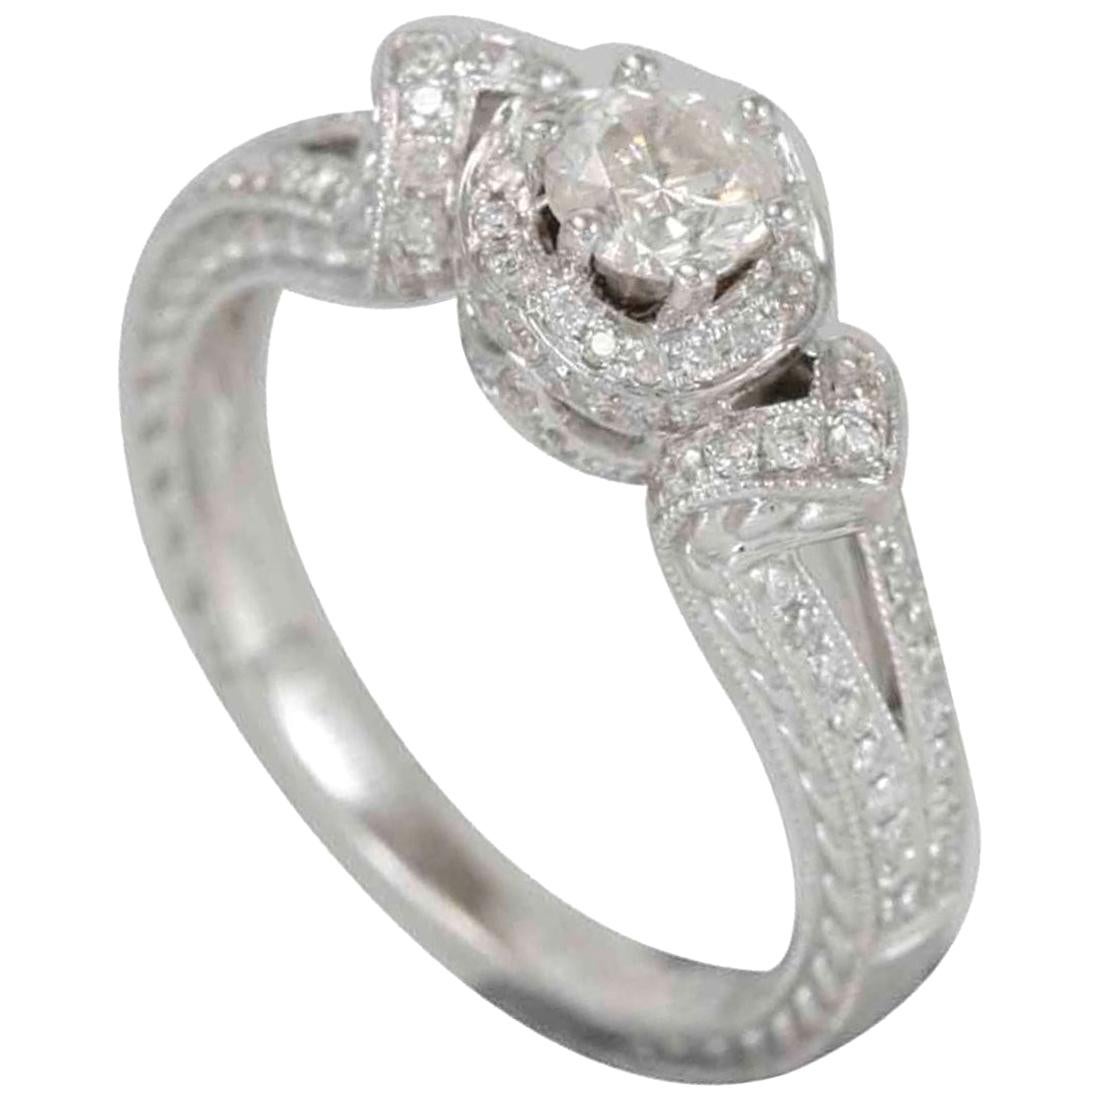 Suzy Levian 18 Karat White Gold Diamond Engagement Ring